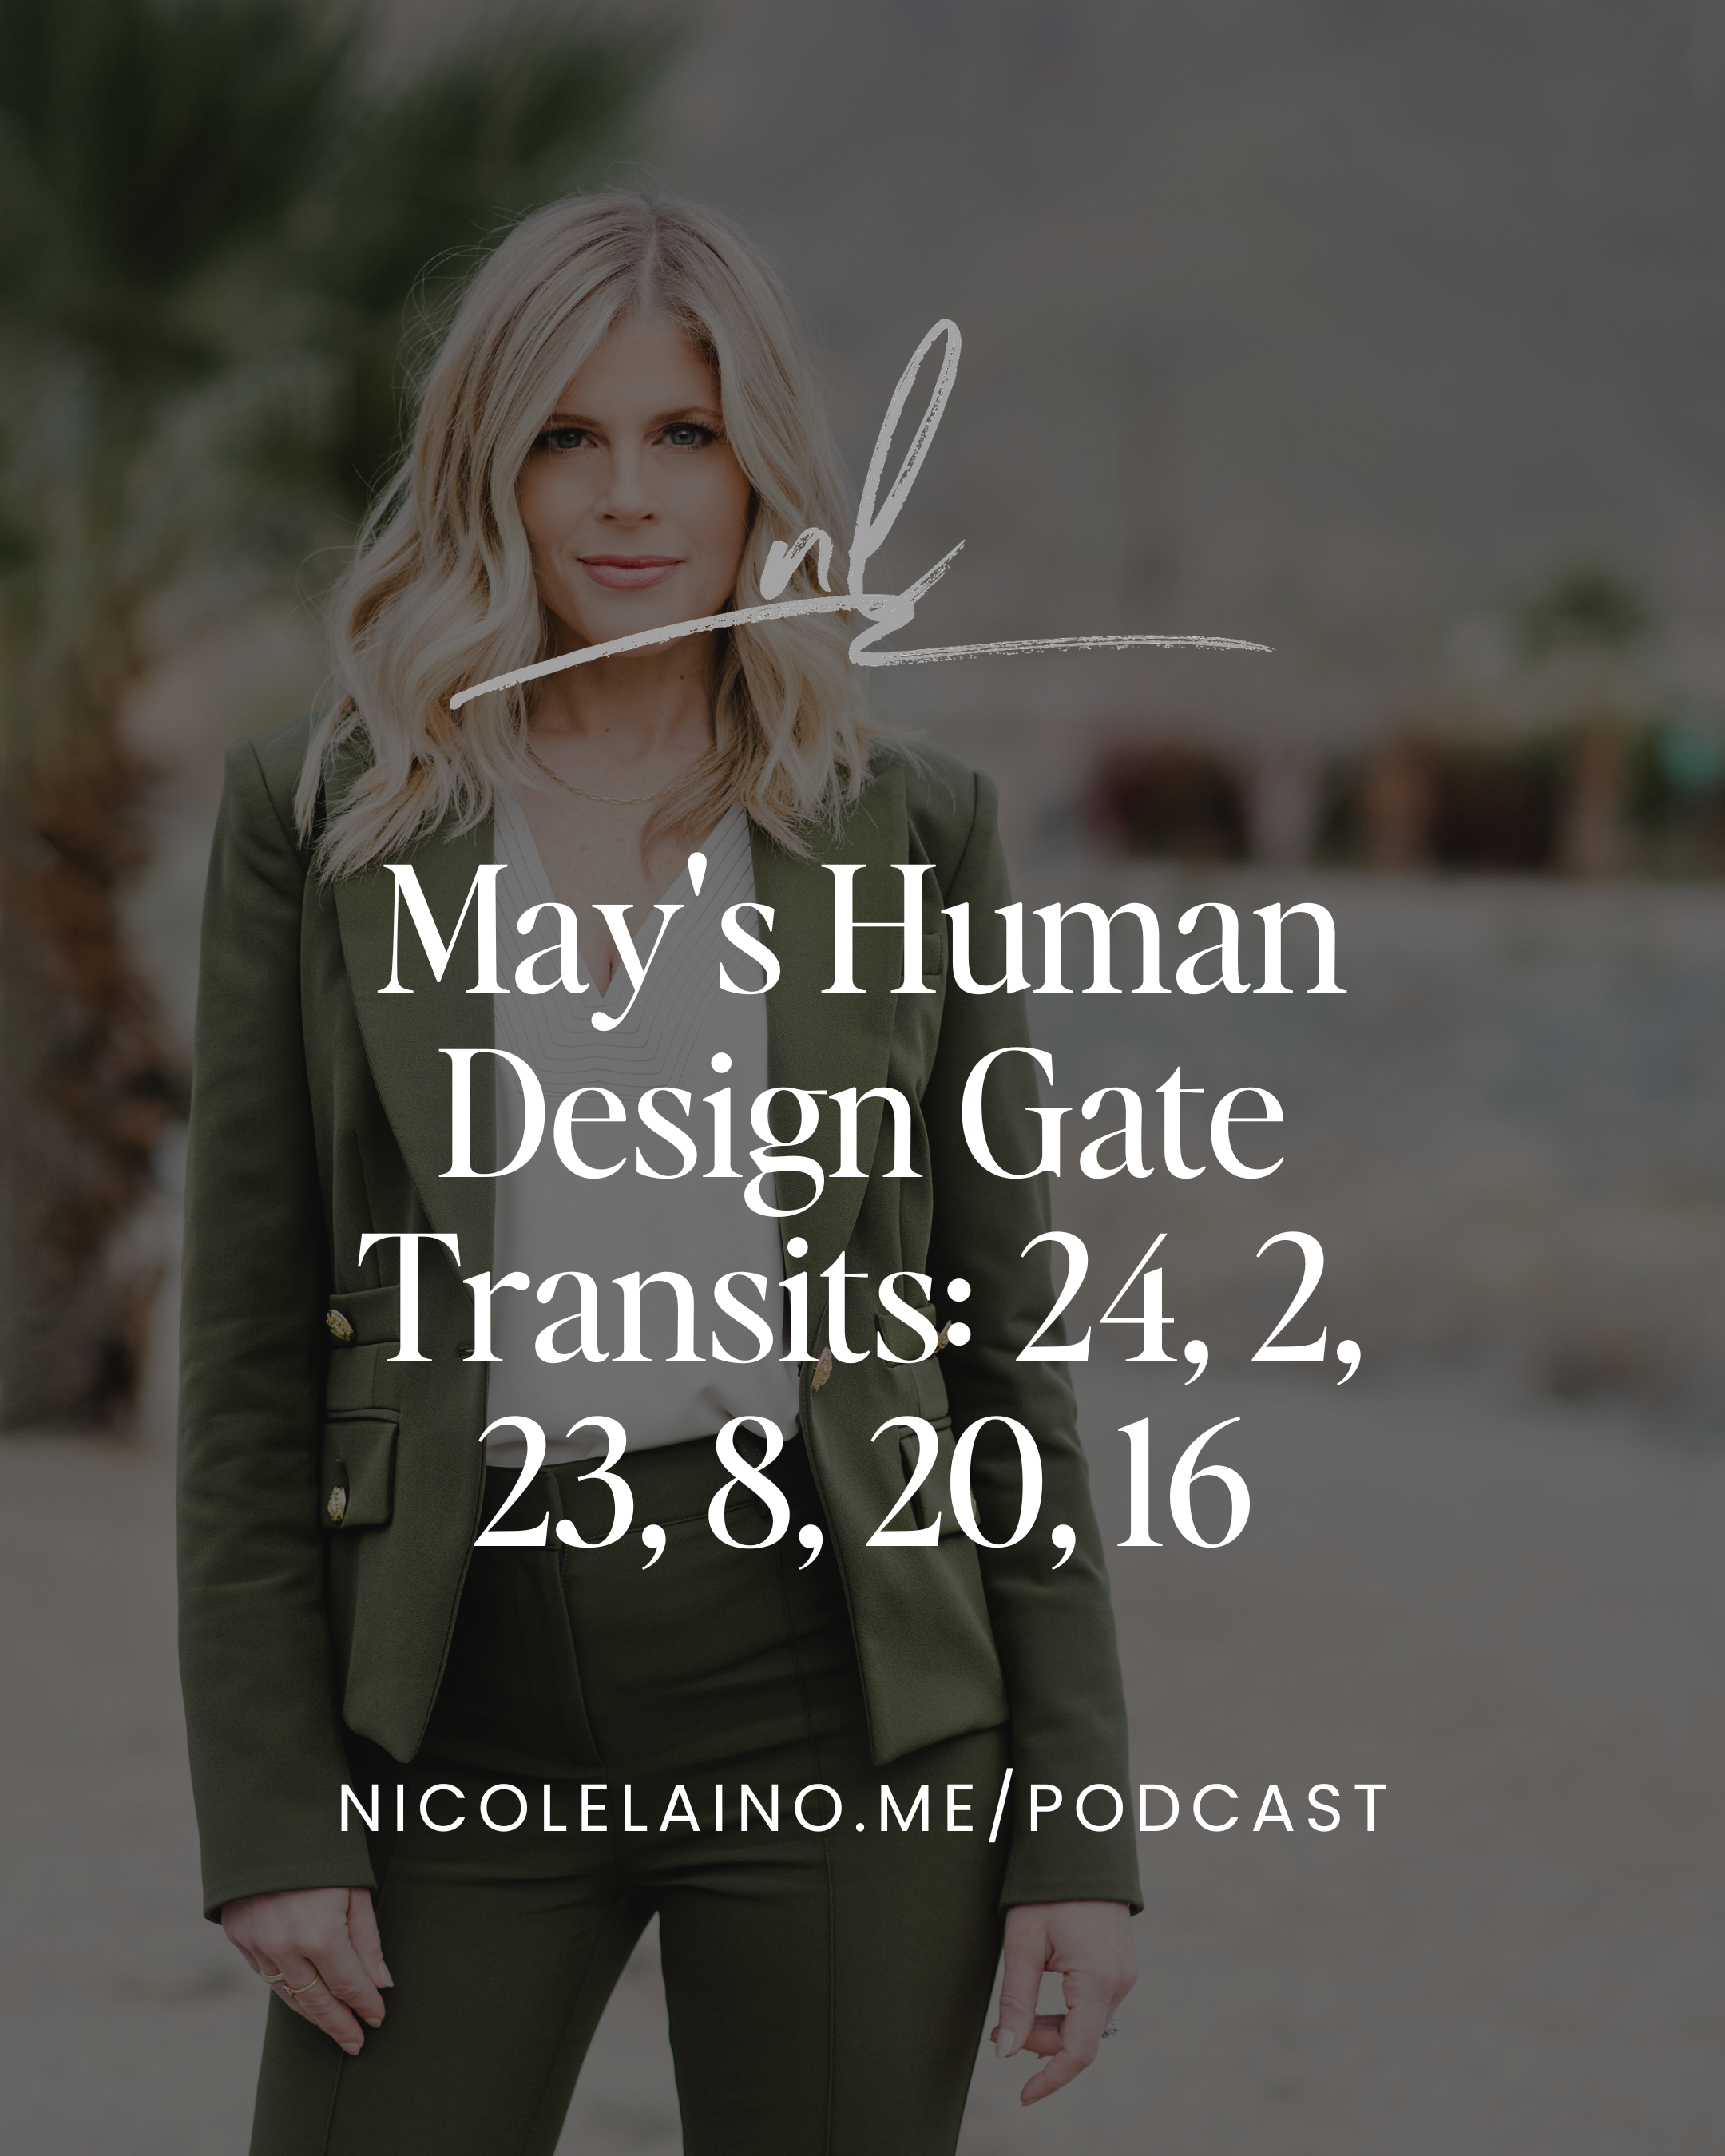 May's Human Design Gate Transits: 24, 2, 23, 8, 20, 16